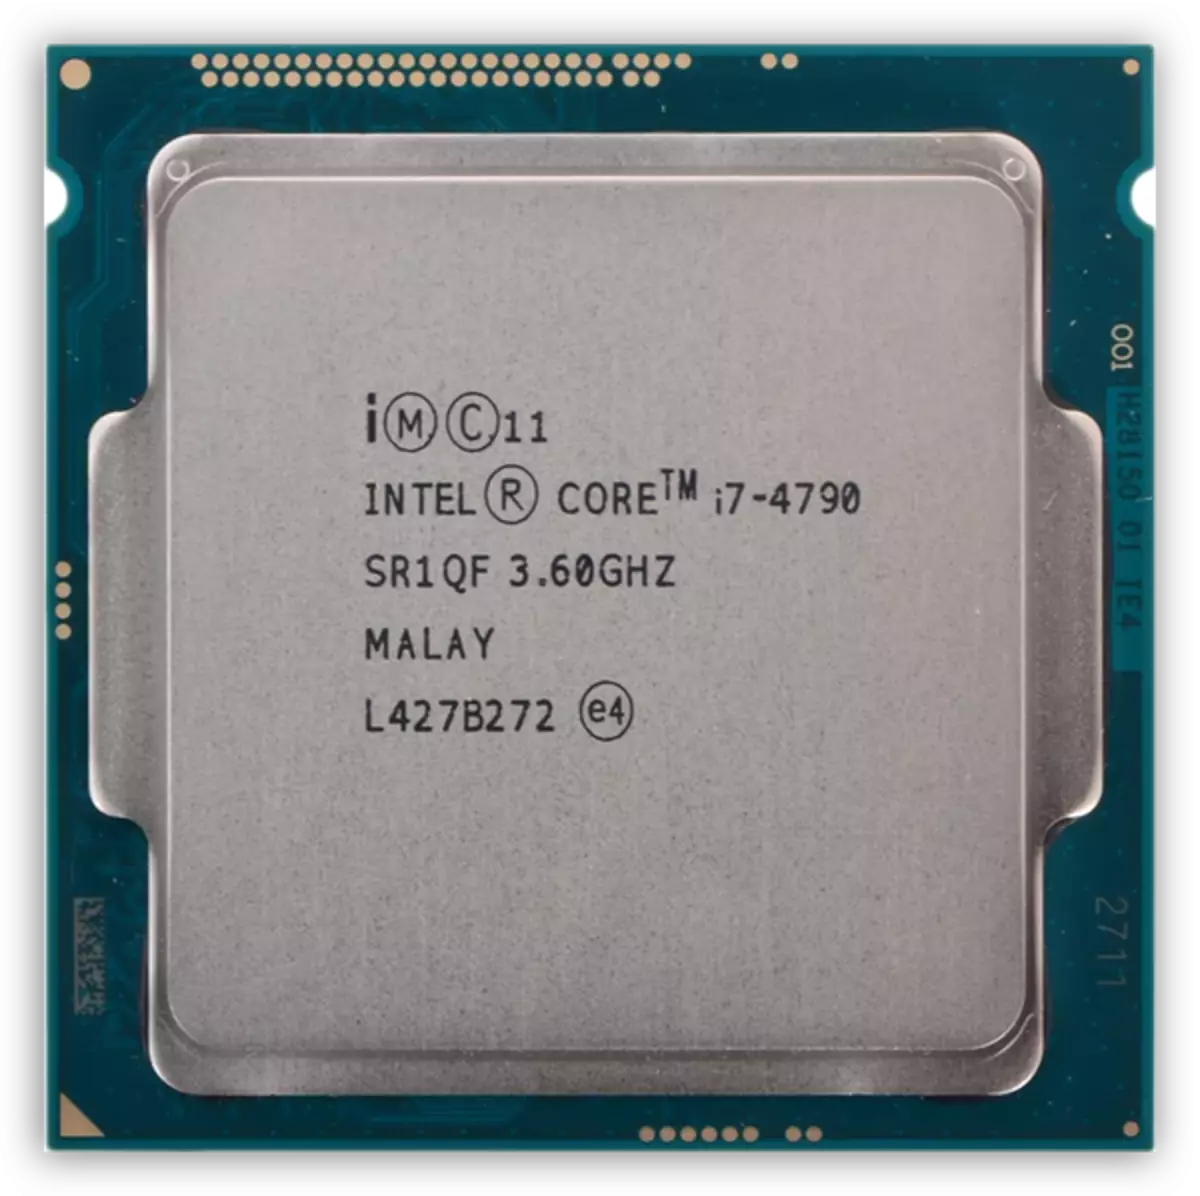 Core i7-4790 procesoro pri Haswell-arkitekturo